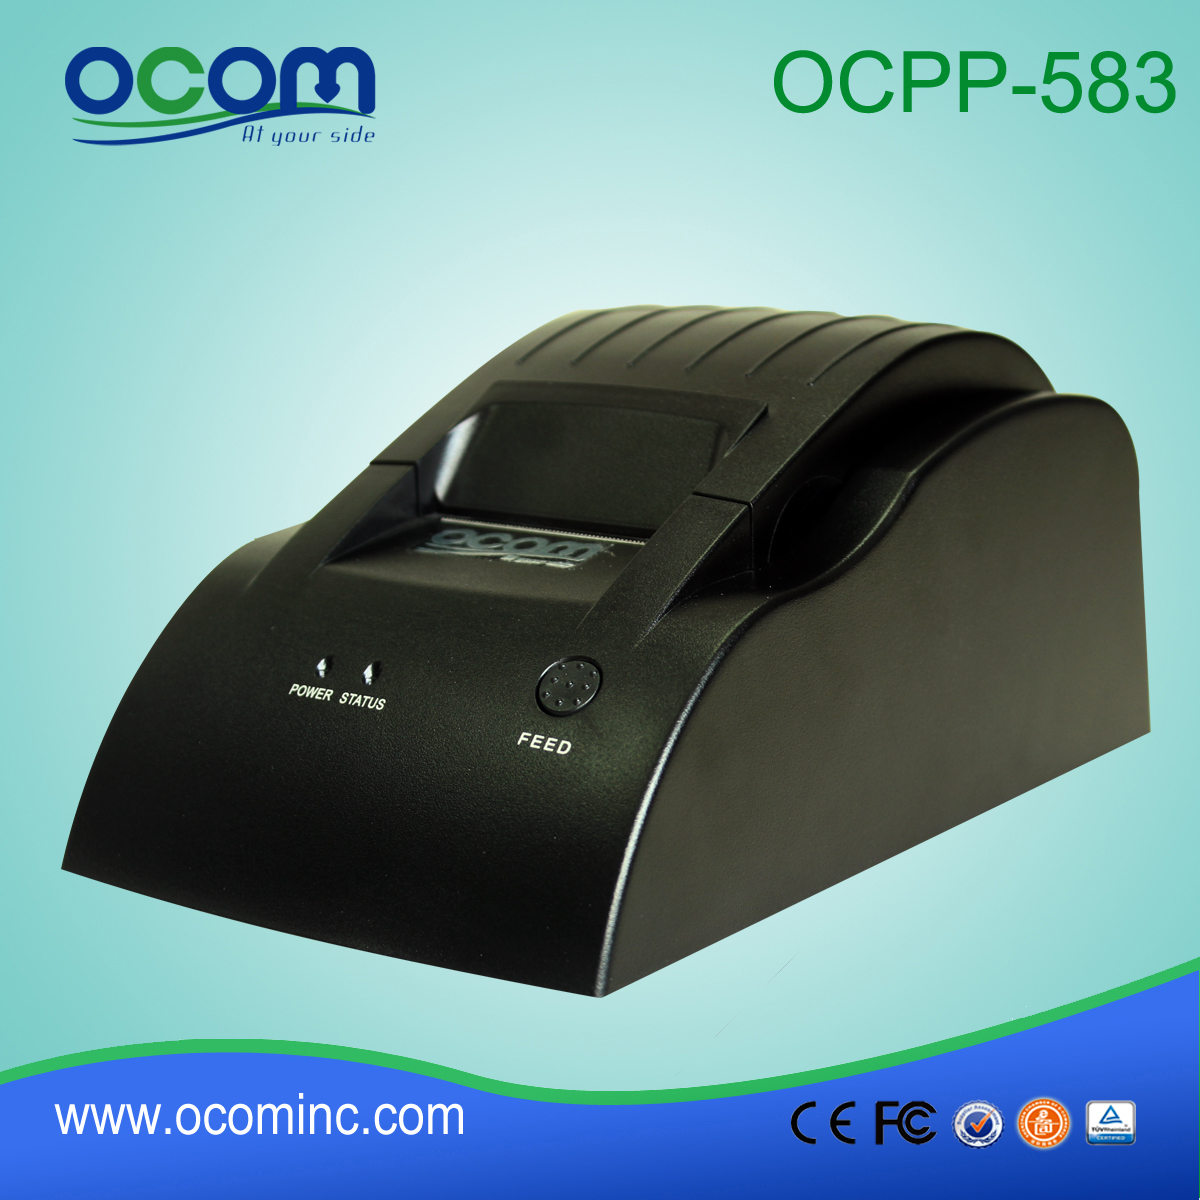 Modelo barato OCPP-583-U 58 mm POS System USB Thermal Ticket Receipt Printer